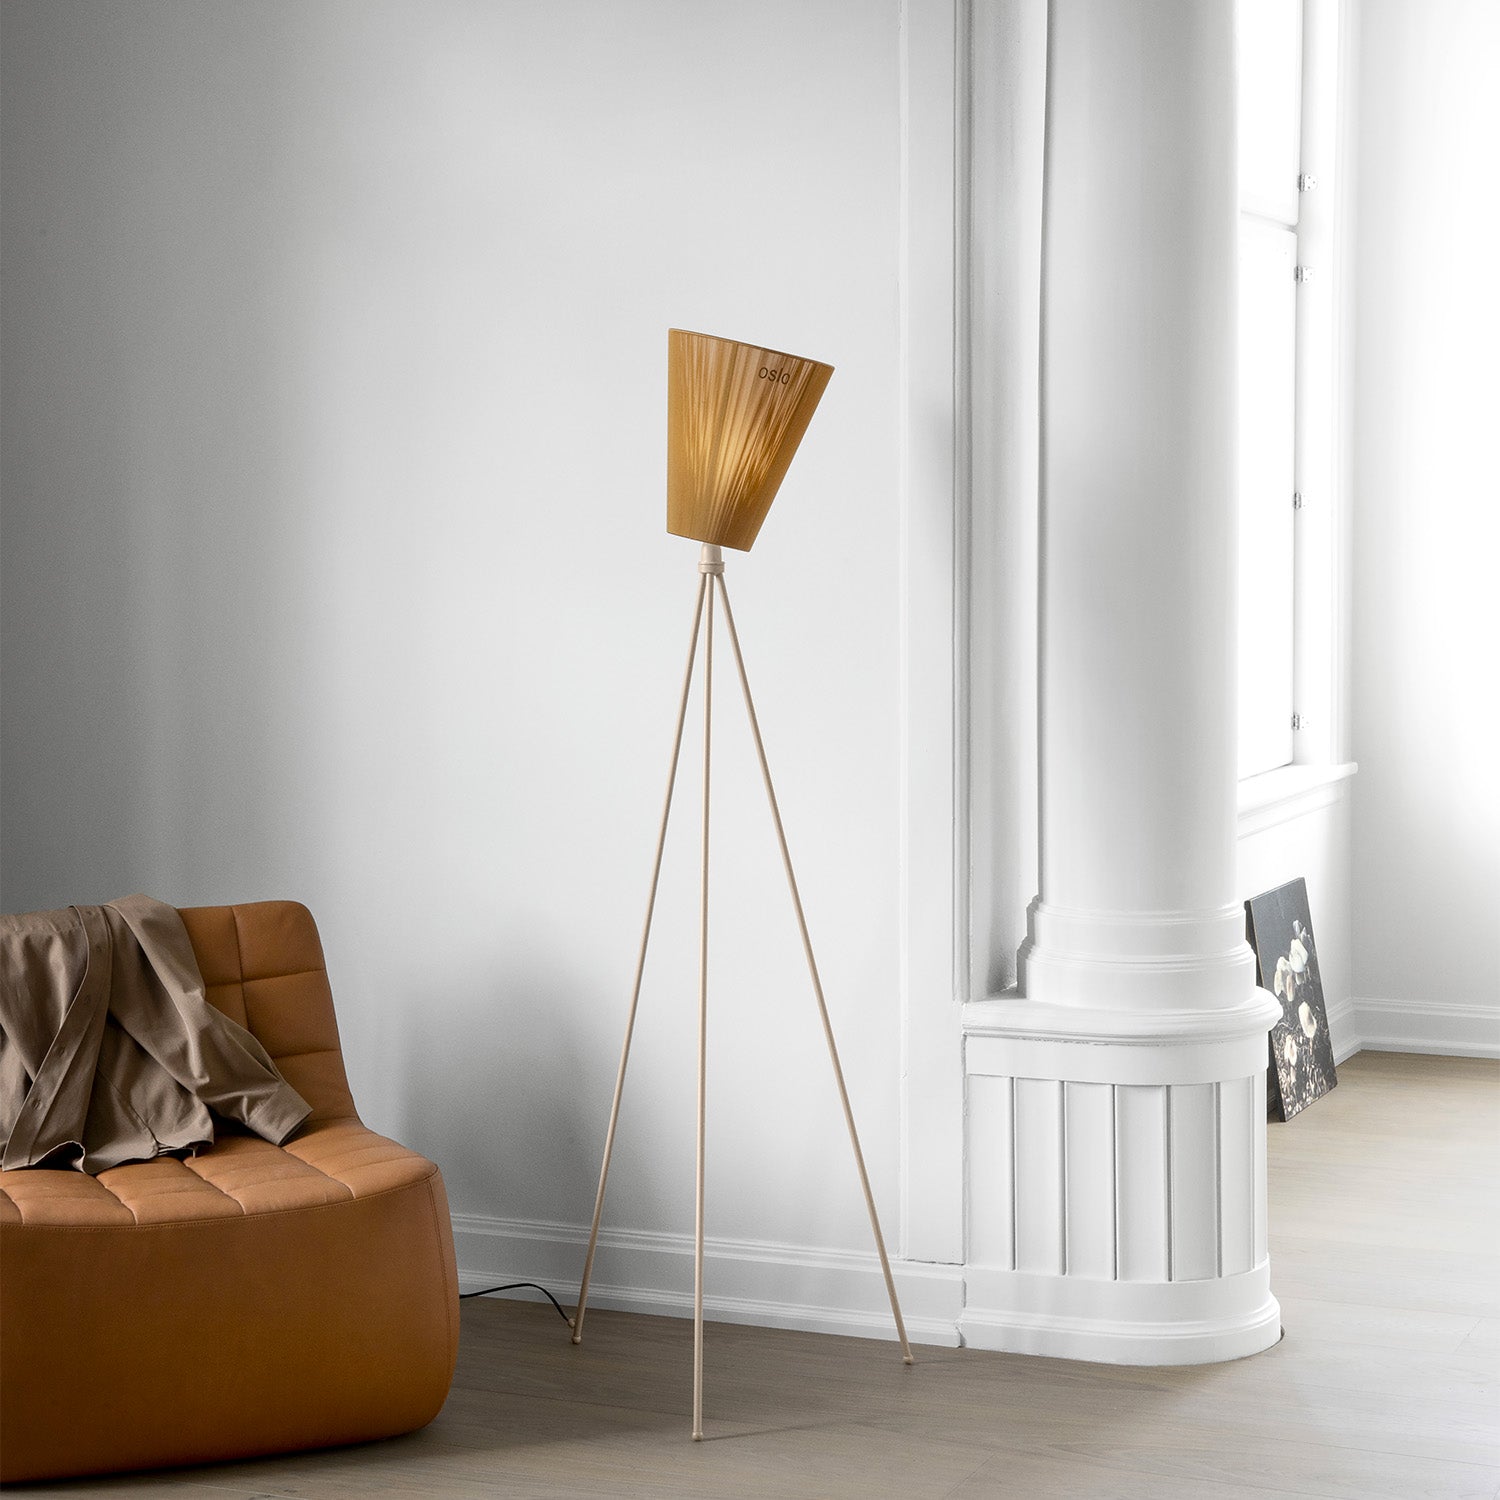 OSLO WOOD - Tripod floor lamp, vintage fabric lampshade